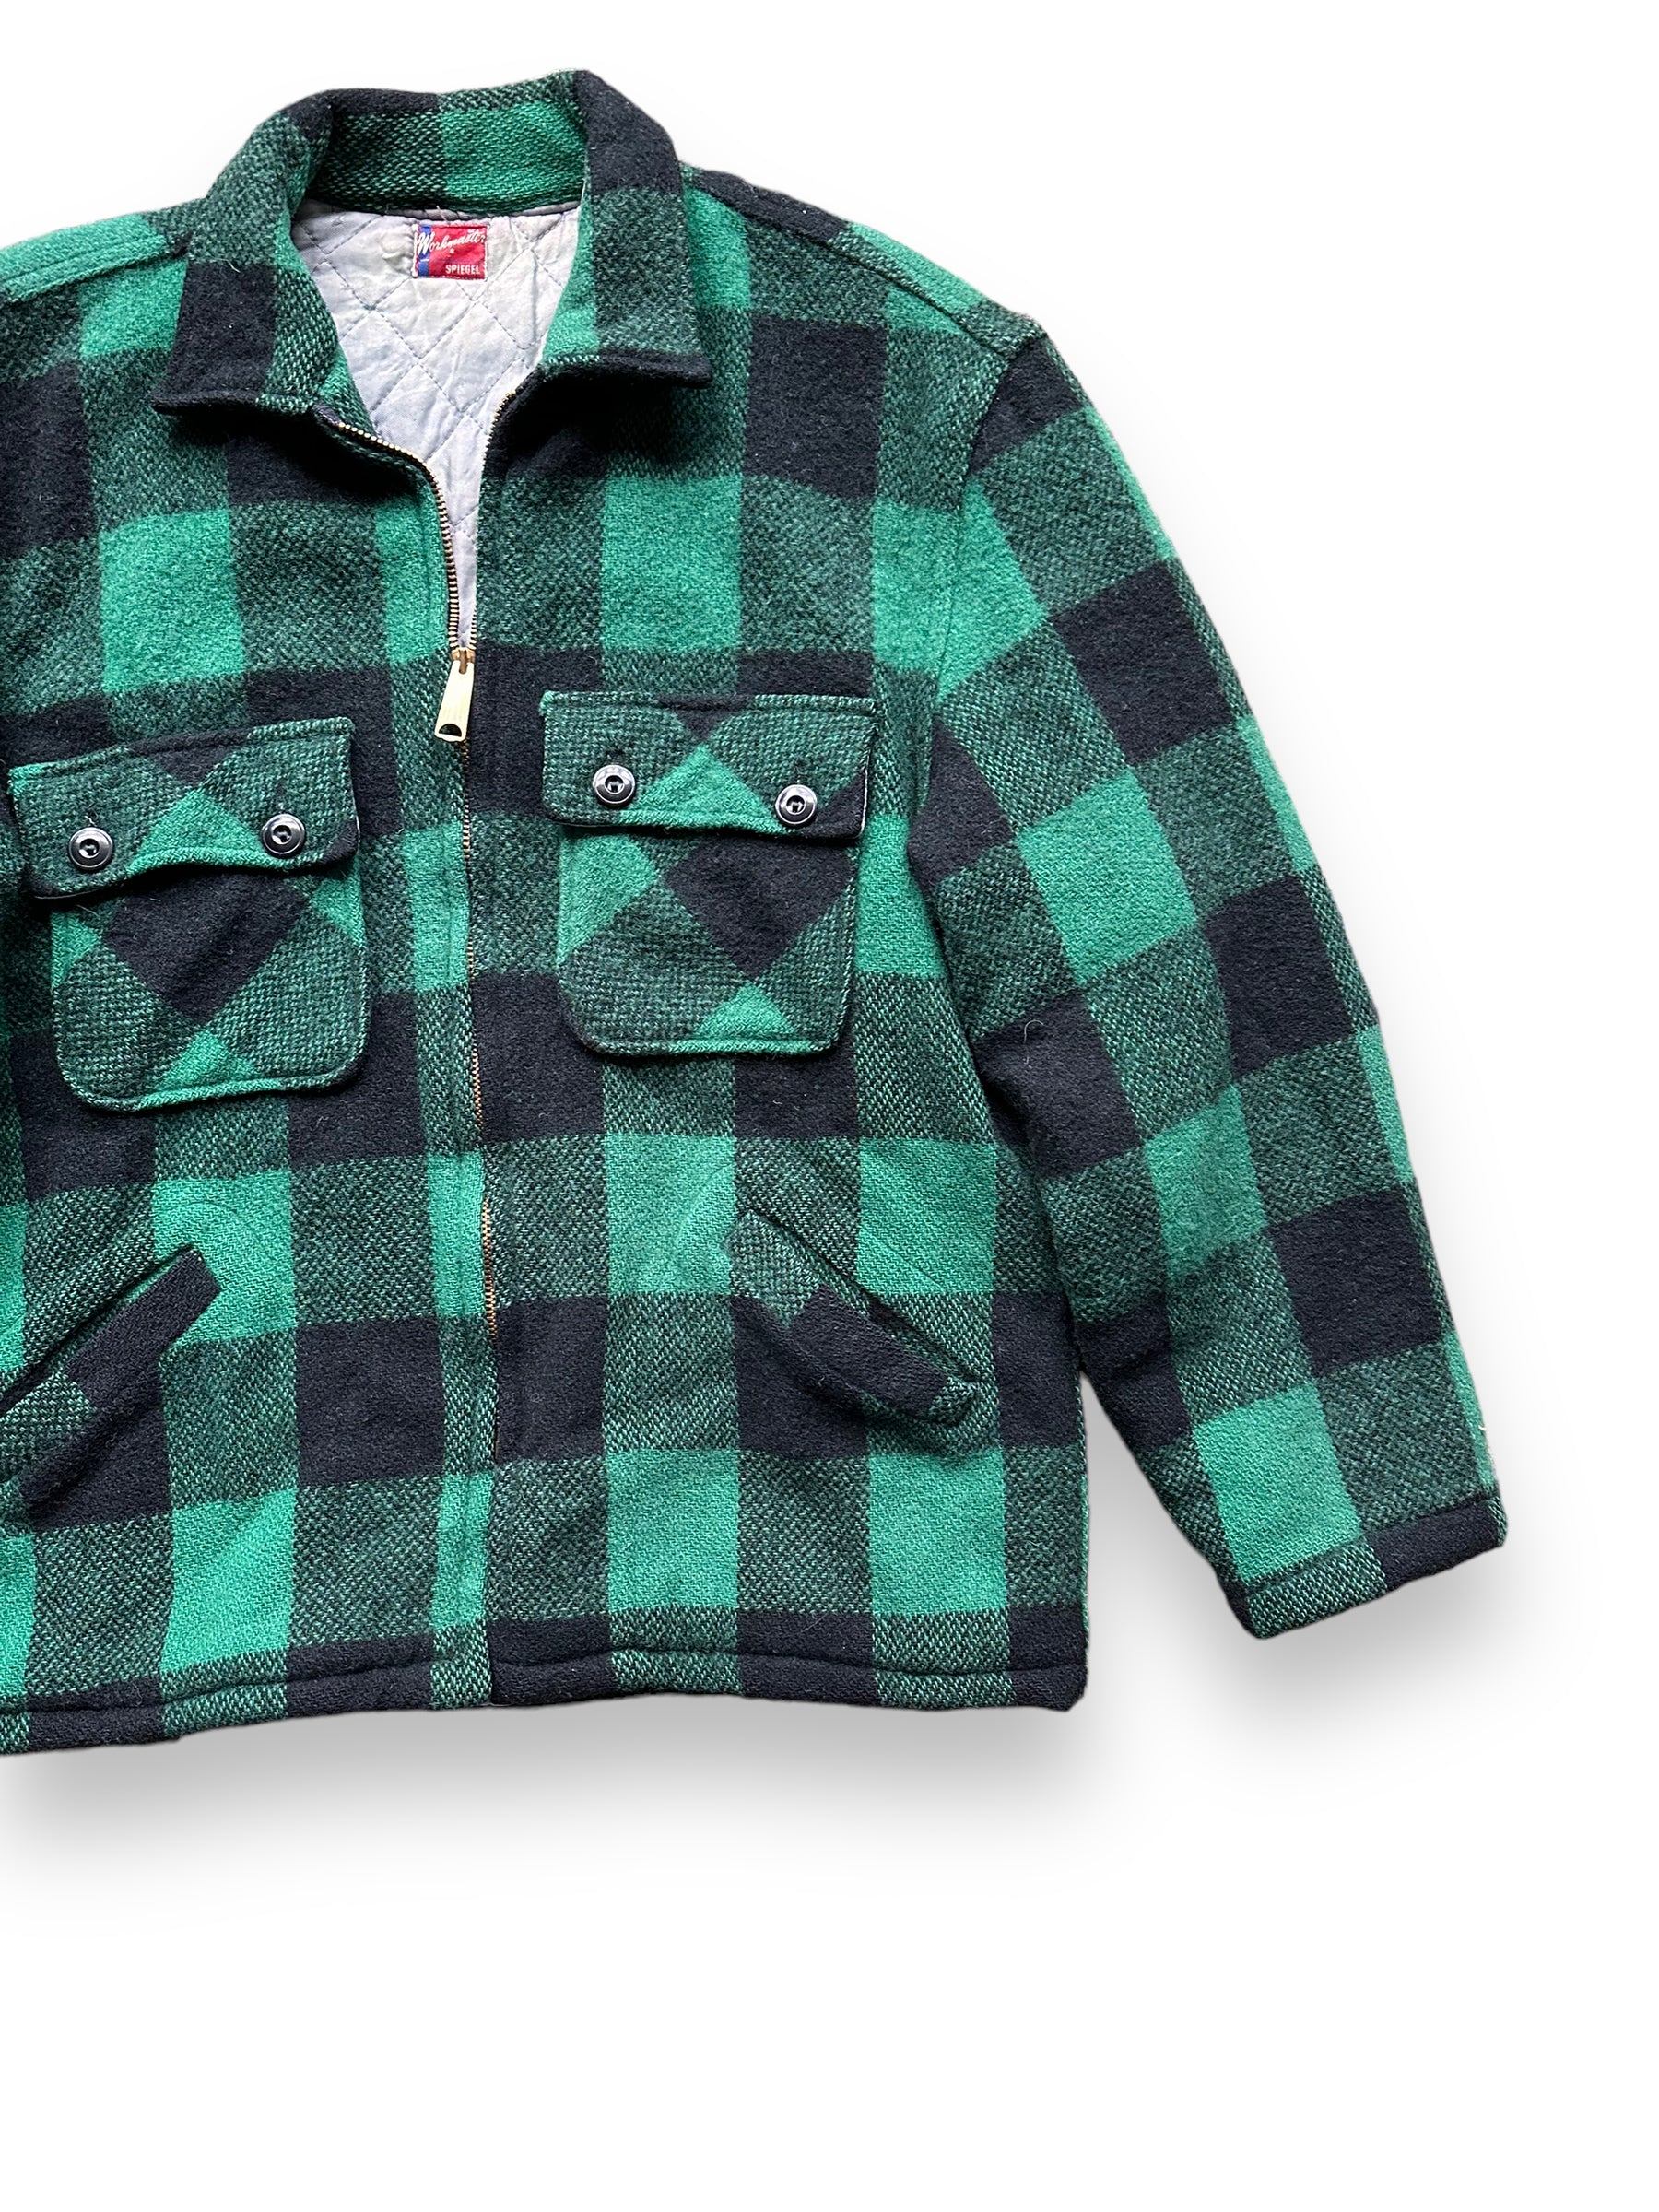 Front Left View of Vintage Green & Black Spiegel Workmaster Jacket SZ L | Vintage Wool Jacket Seattle | Barn Owl Vintage Seattle